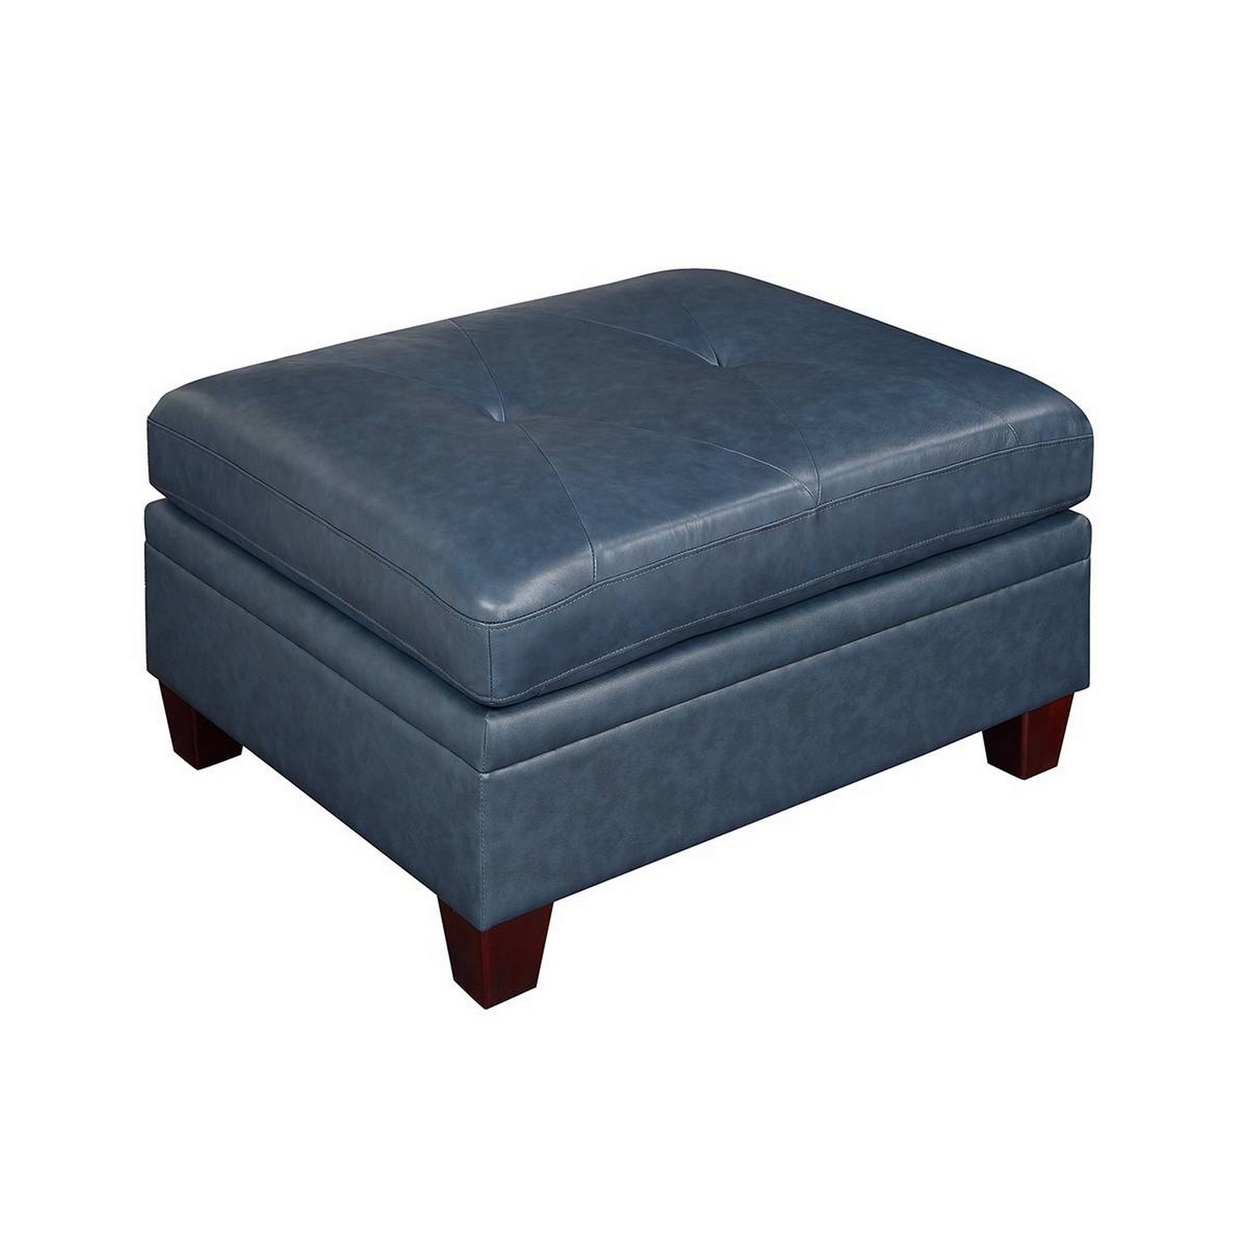 Indy 36 Inch Modern Square Ottoman, Foam Seating, Blue Top Grain Leather- Saltoro Sherpi